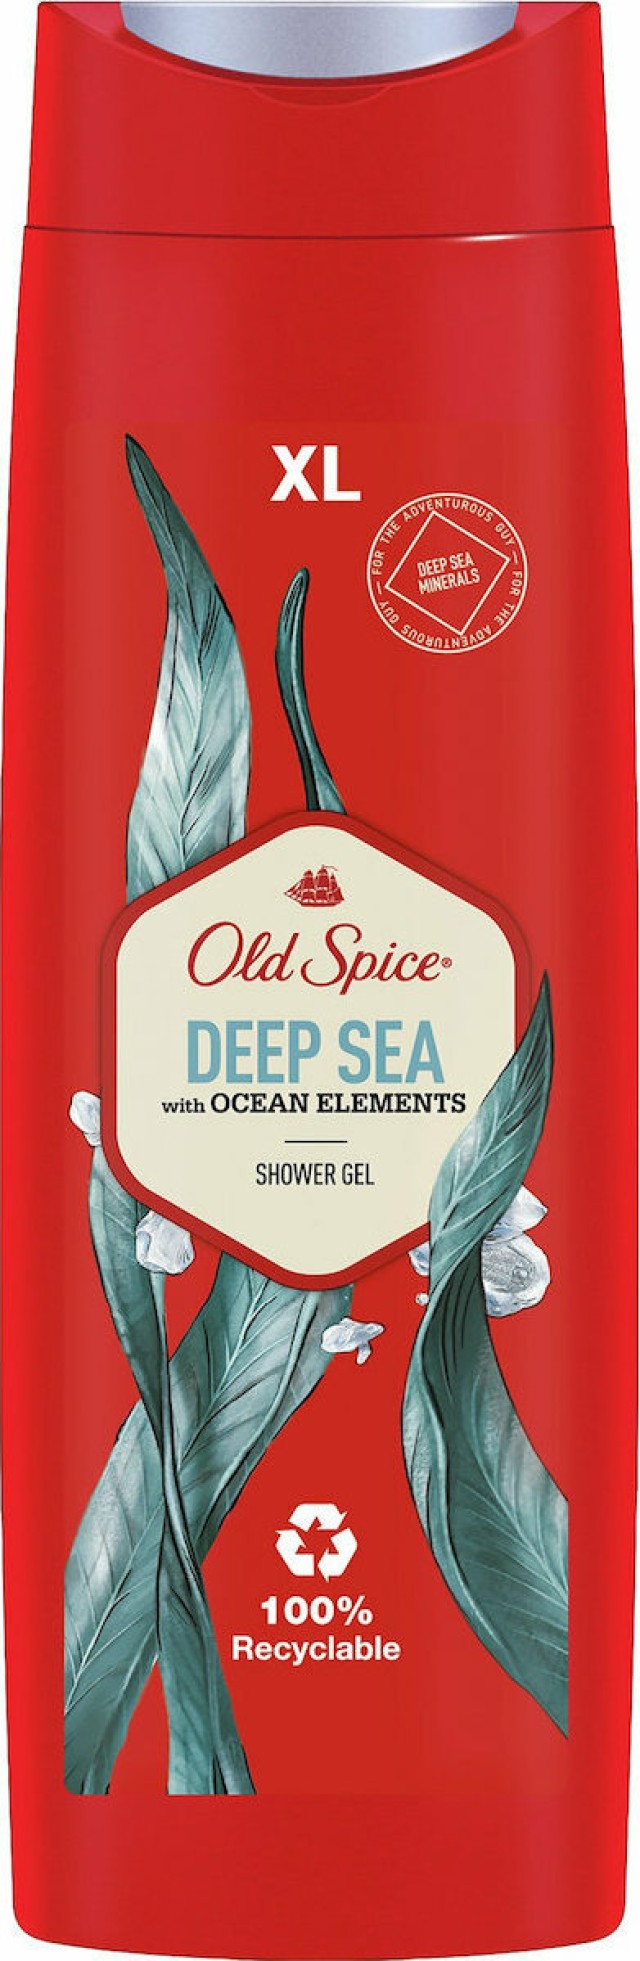 Old Spice Deep Sea Shower Gel Αφρόλουτρο Gel για Άνδρες 400ml